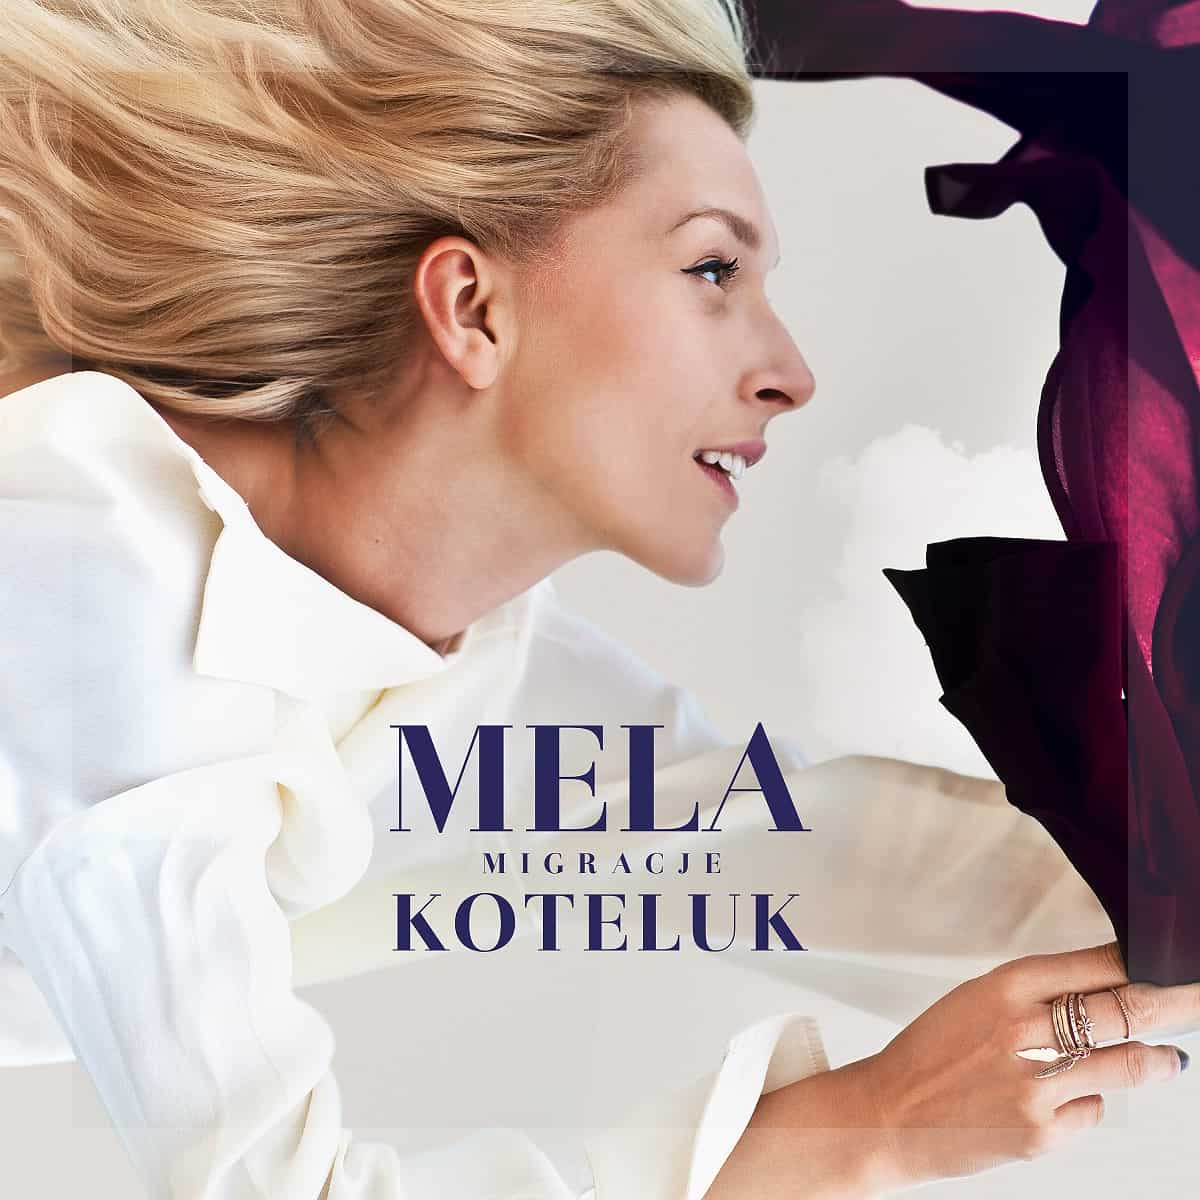 Mela Koteluk - Tragikomedia - premiera nowego teledysku